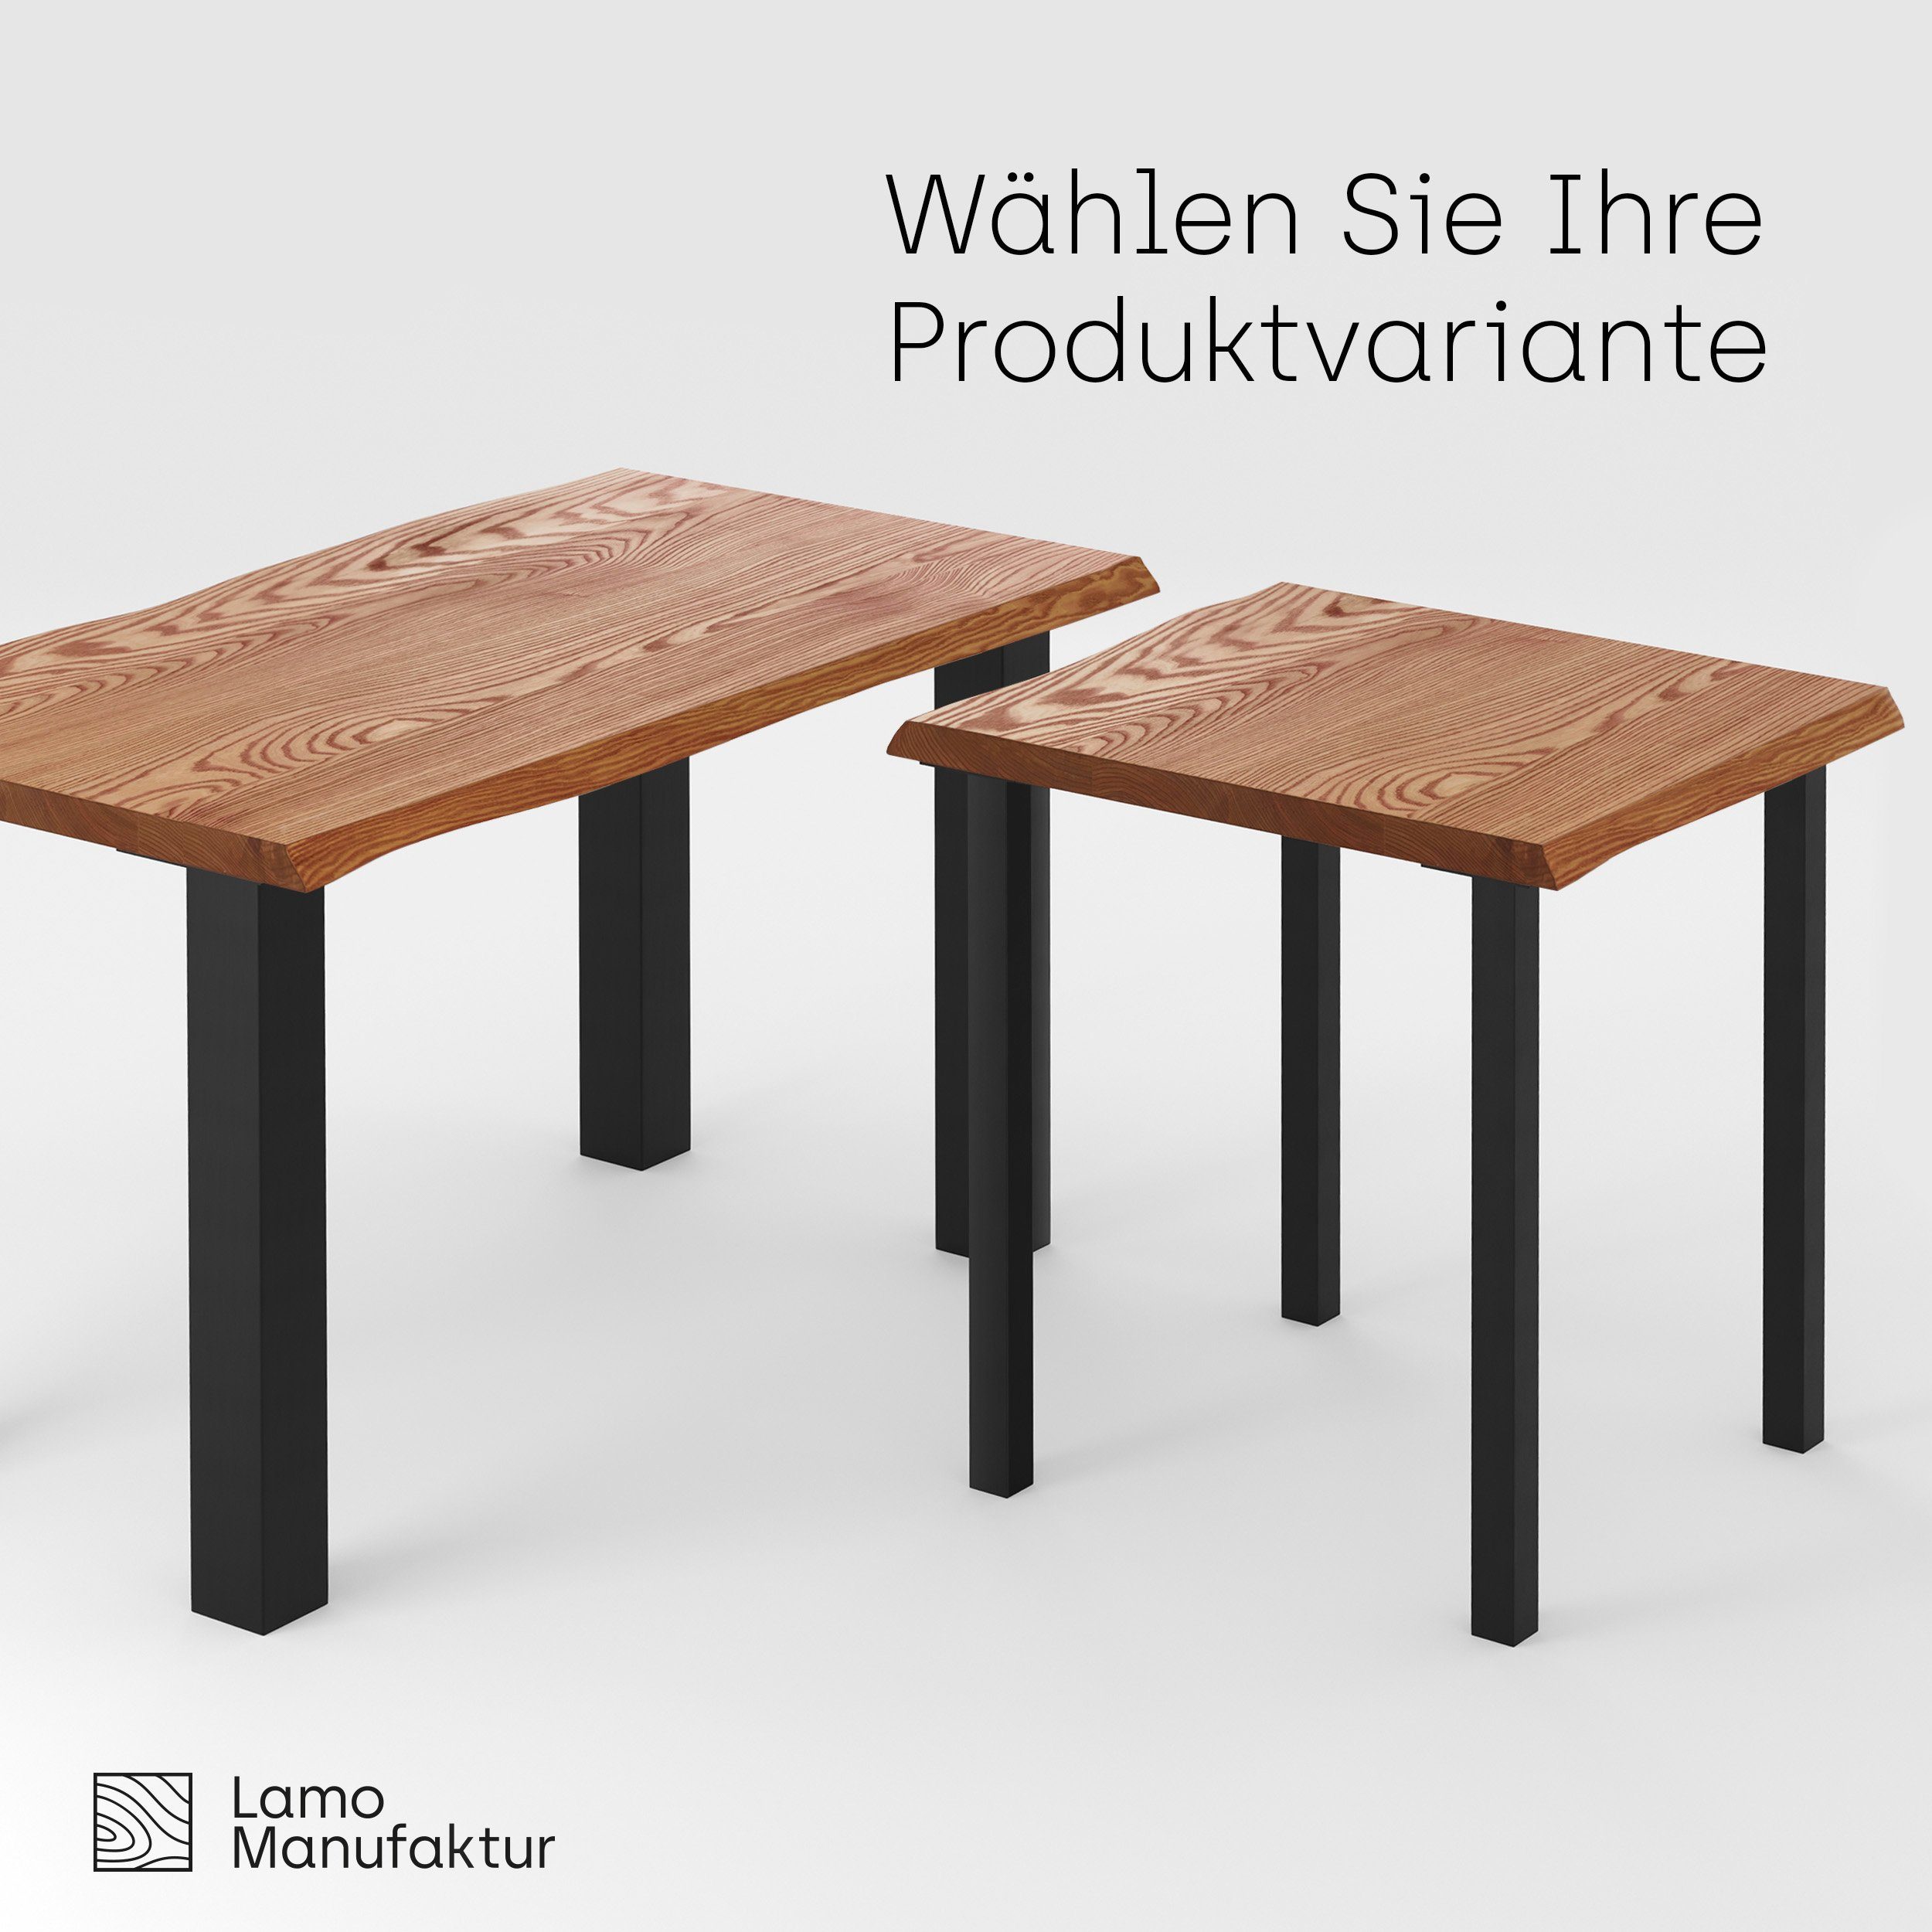 LAMO Manufaktur Baumkantentisch Classic Esstisch Massivholz | Metallgestell massiv (1 Weiß Rustikal inkl. Baumkante Tisch)